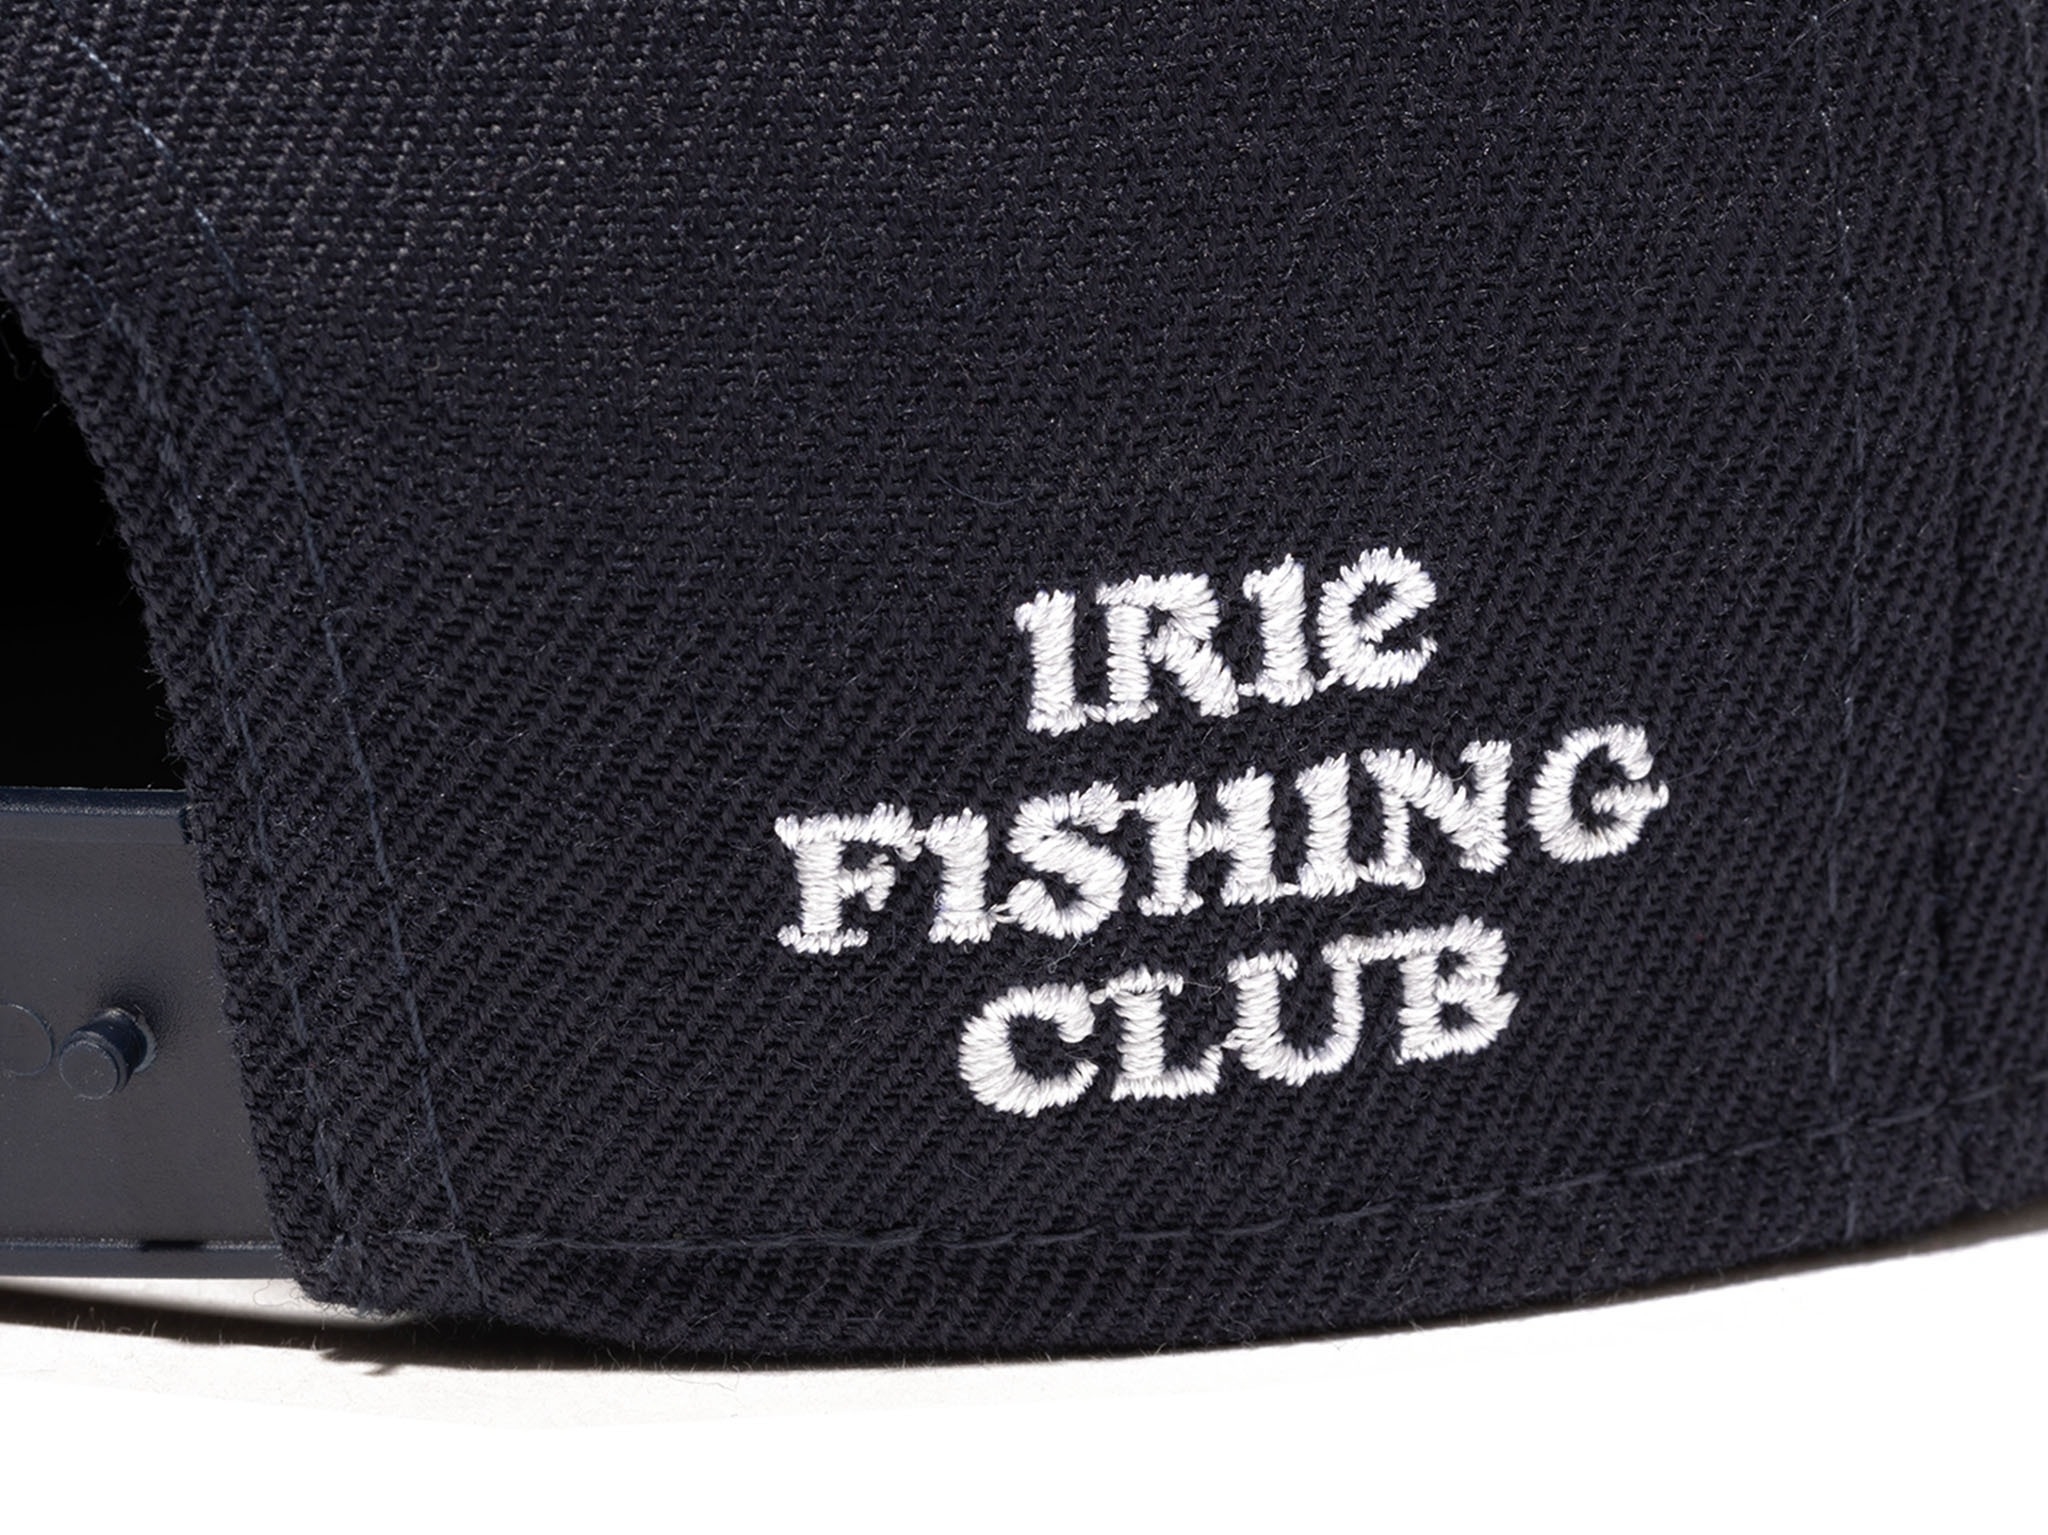 NEW ITEM】-I.F.C×ORION CROSS ROD CAP- | IRIE FISHING CLUB